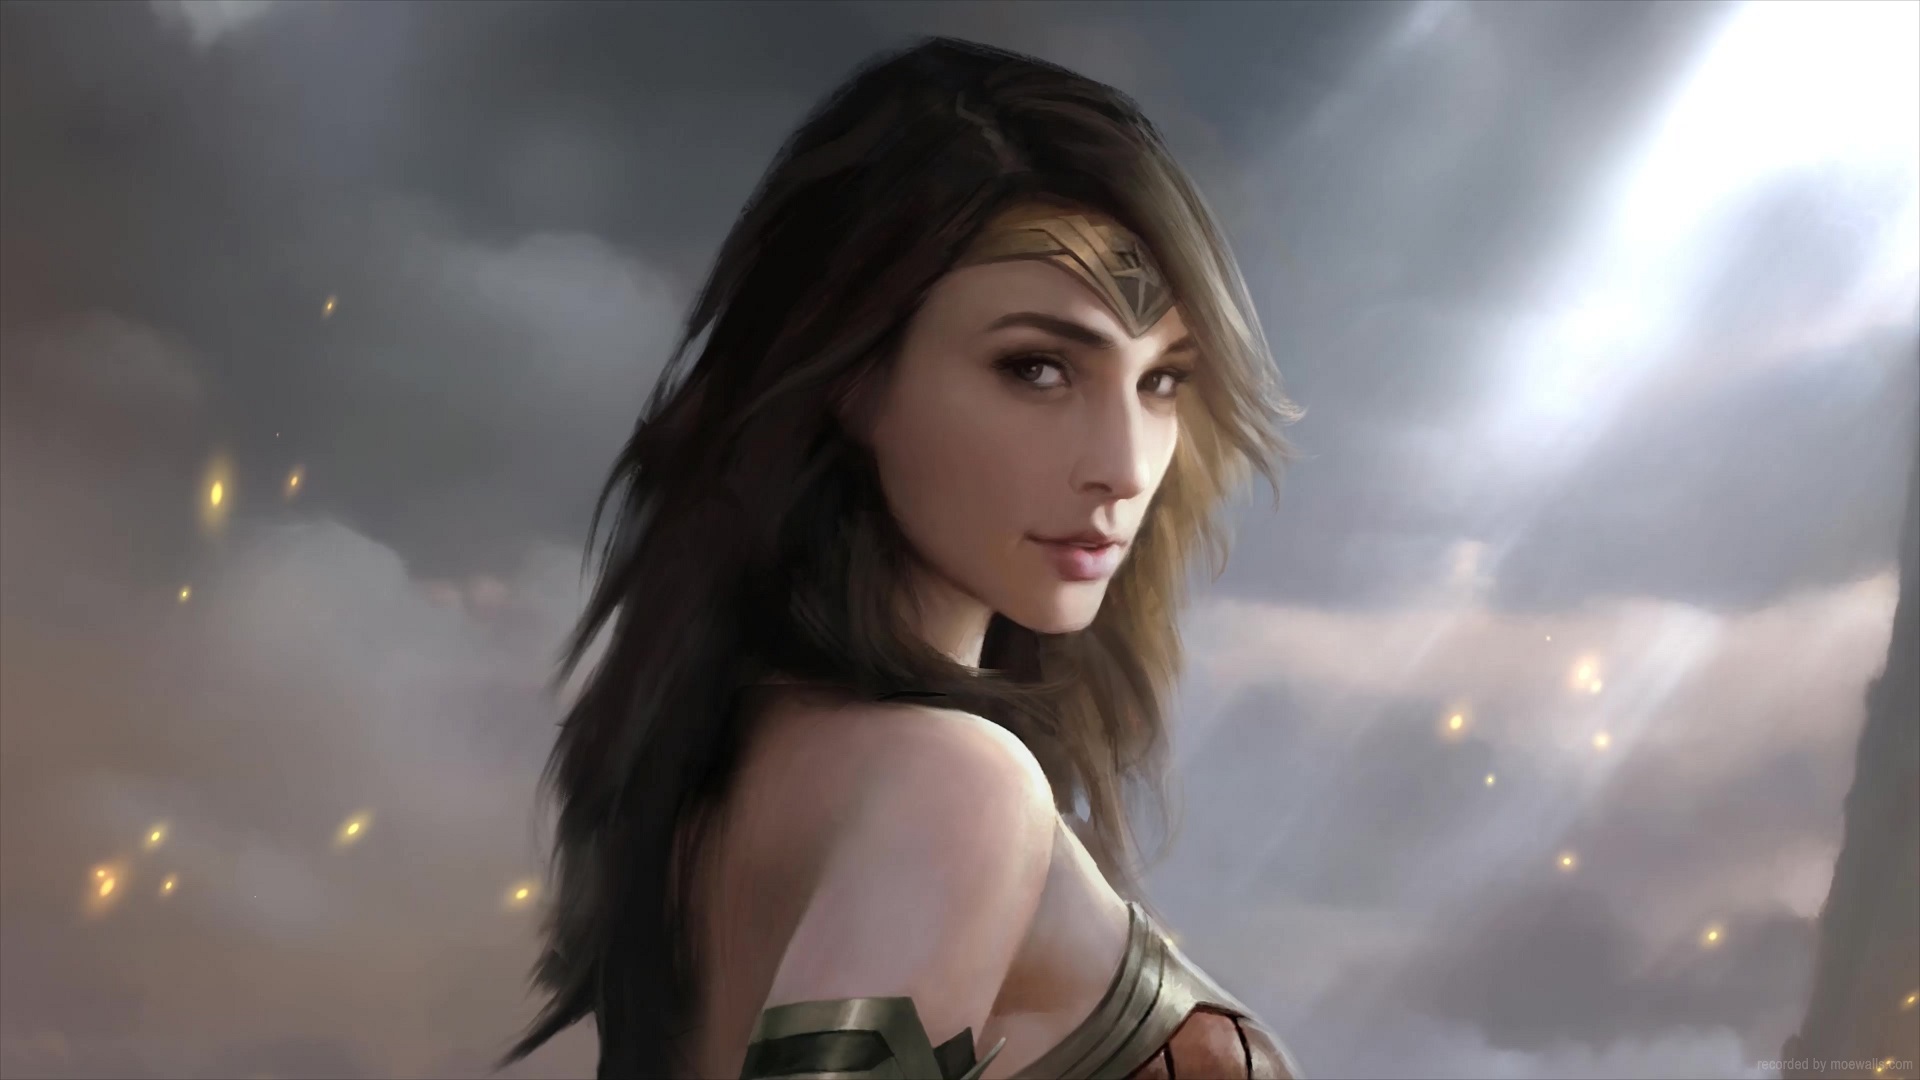 Wallpaper Wonder Woman, DC Comics, Gal Gadot, Wonder woman images for  desktop, section фильмы - download